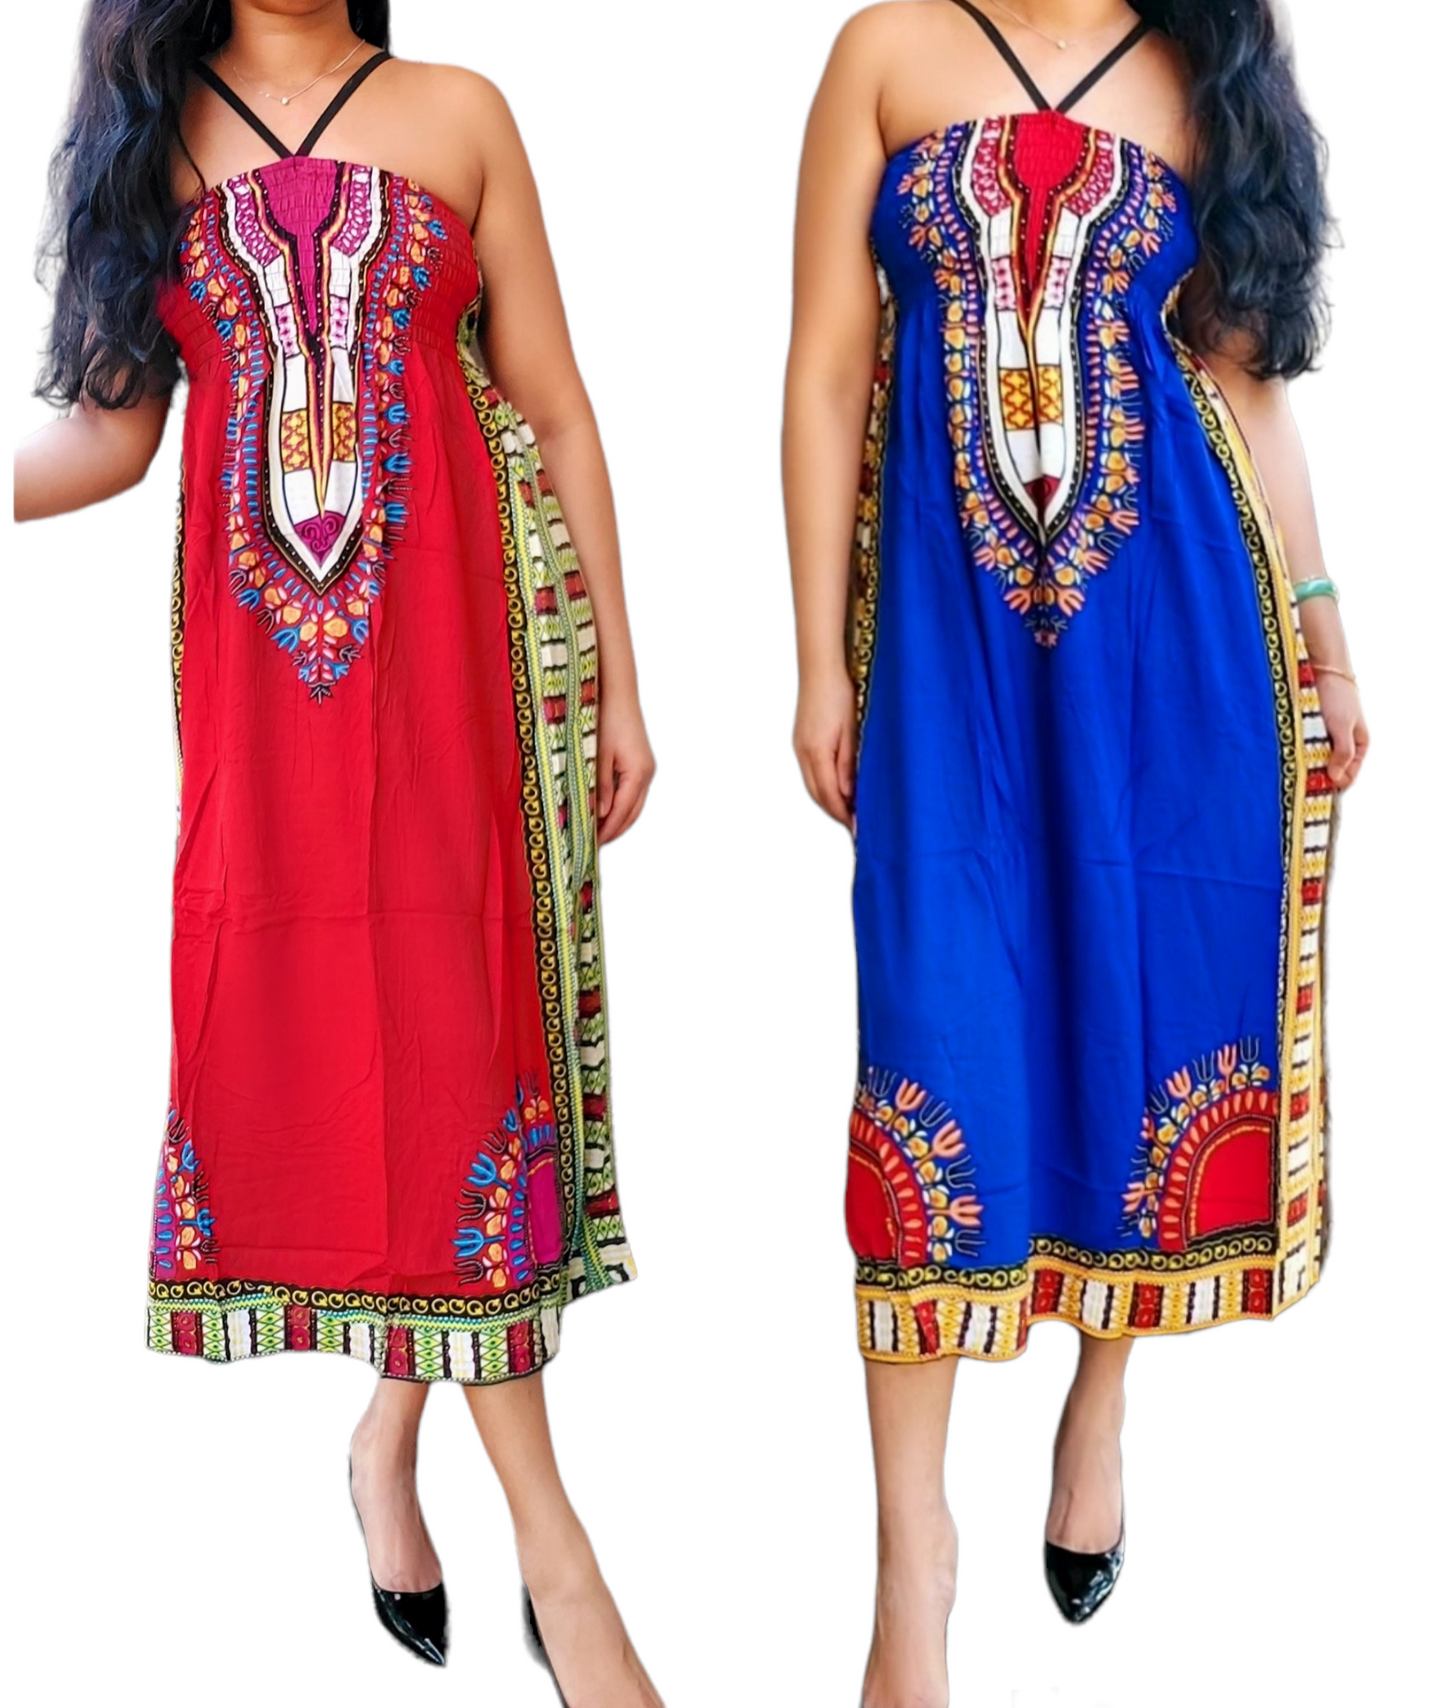 African Tube Dress/ Spagetti Straps - Dashiki Print